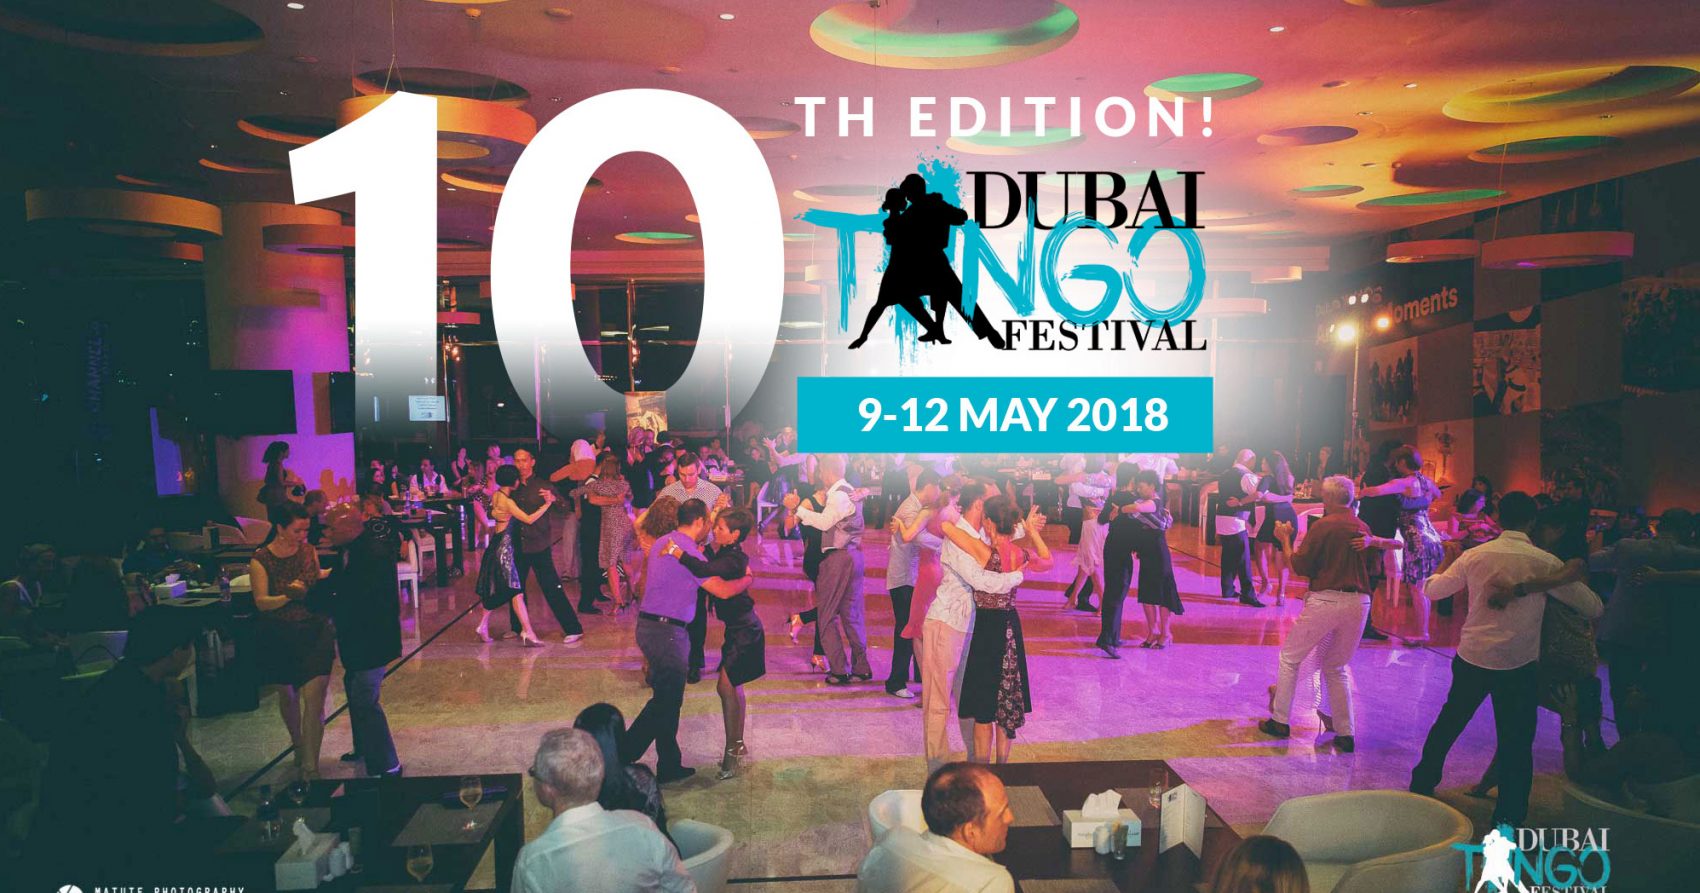 Dubai Tango Festival 2018 - Coming Soon in UAE